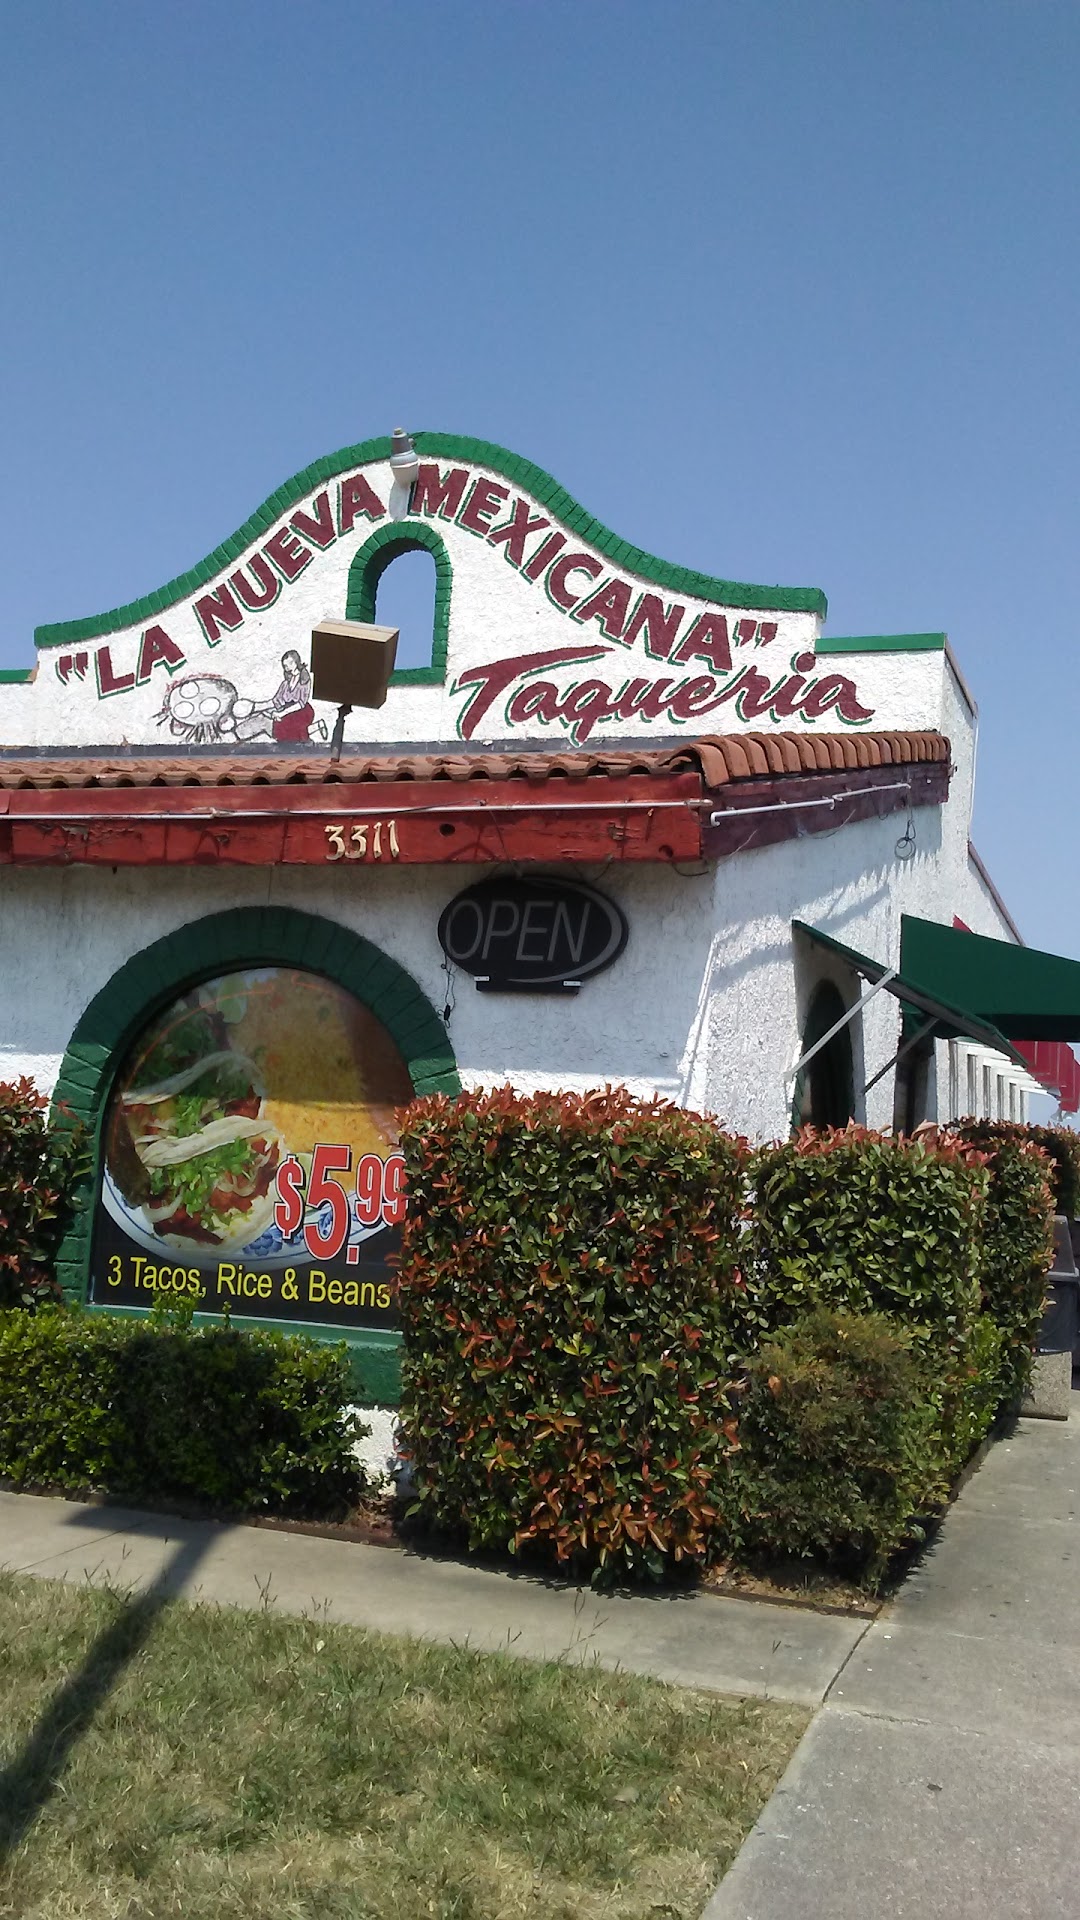 Taqueria La Nueva Mexicana